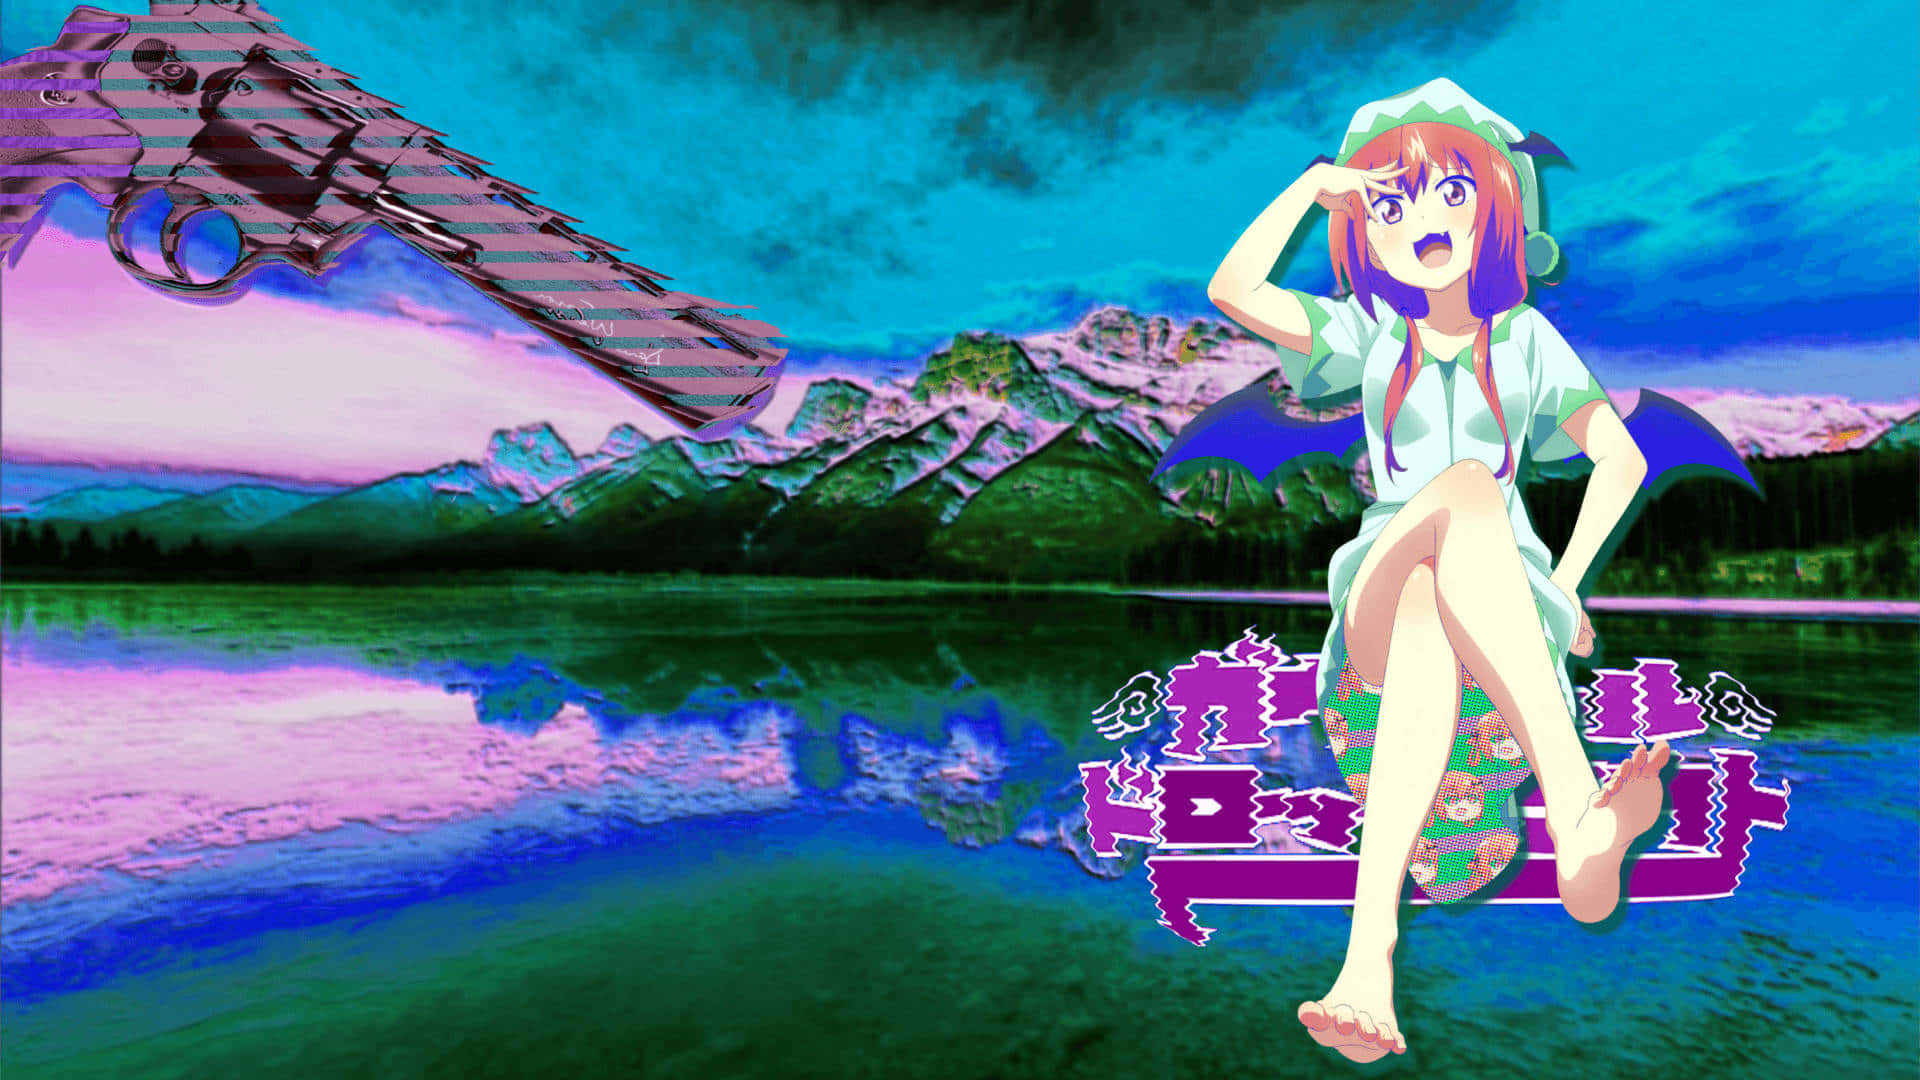 Personajede Anime Vaporwave Empuñando Una Pistola Púrpura En Un Mundo Surrealista Fondo de pantalla